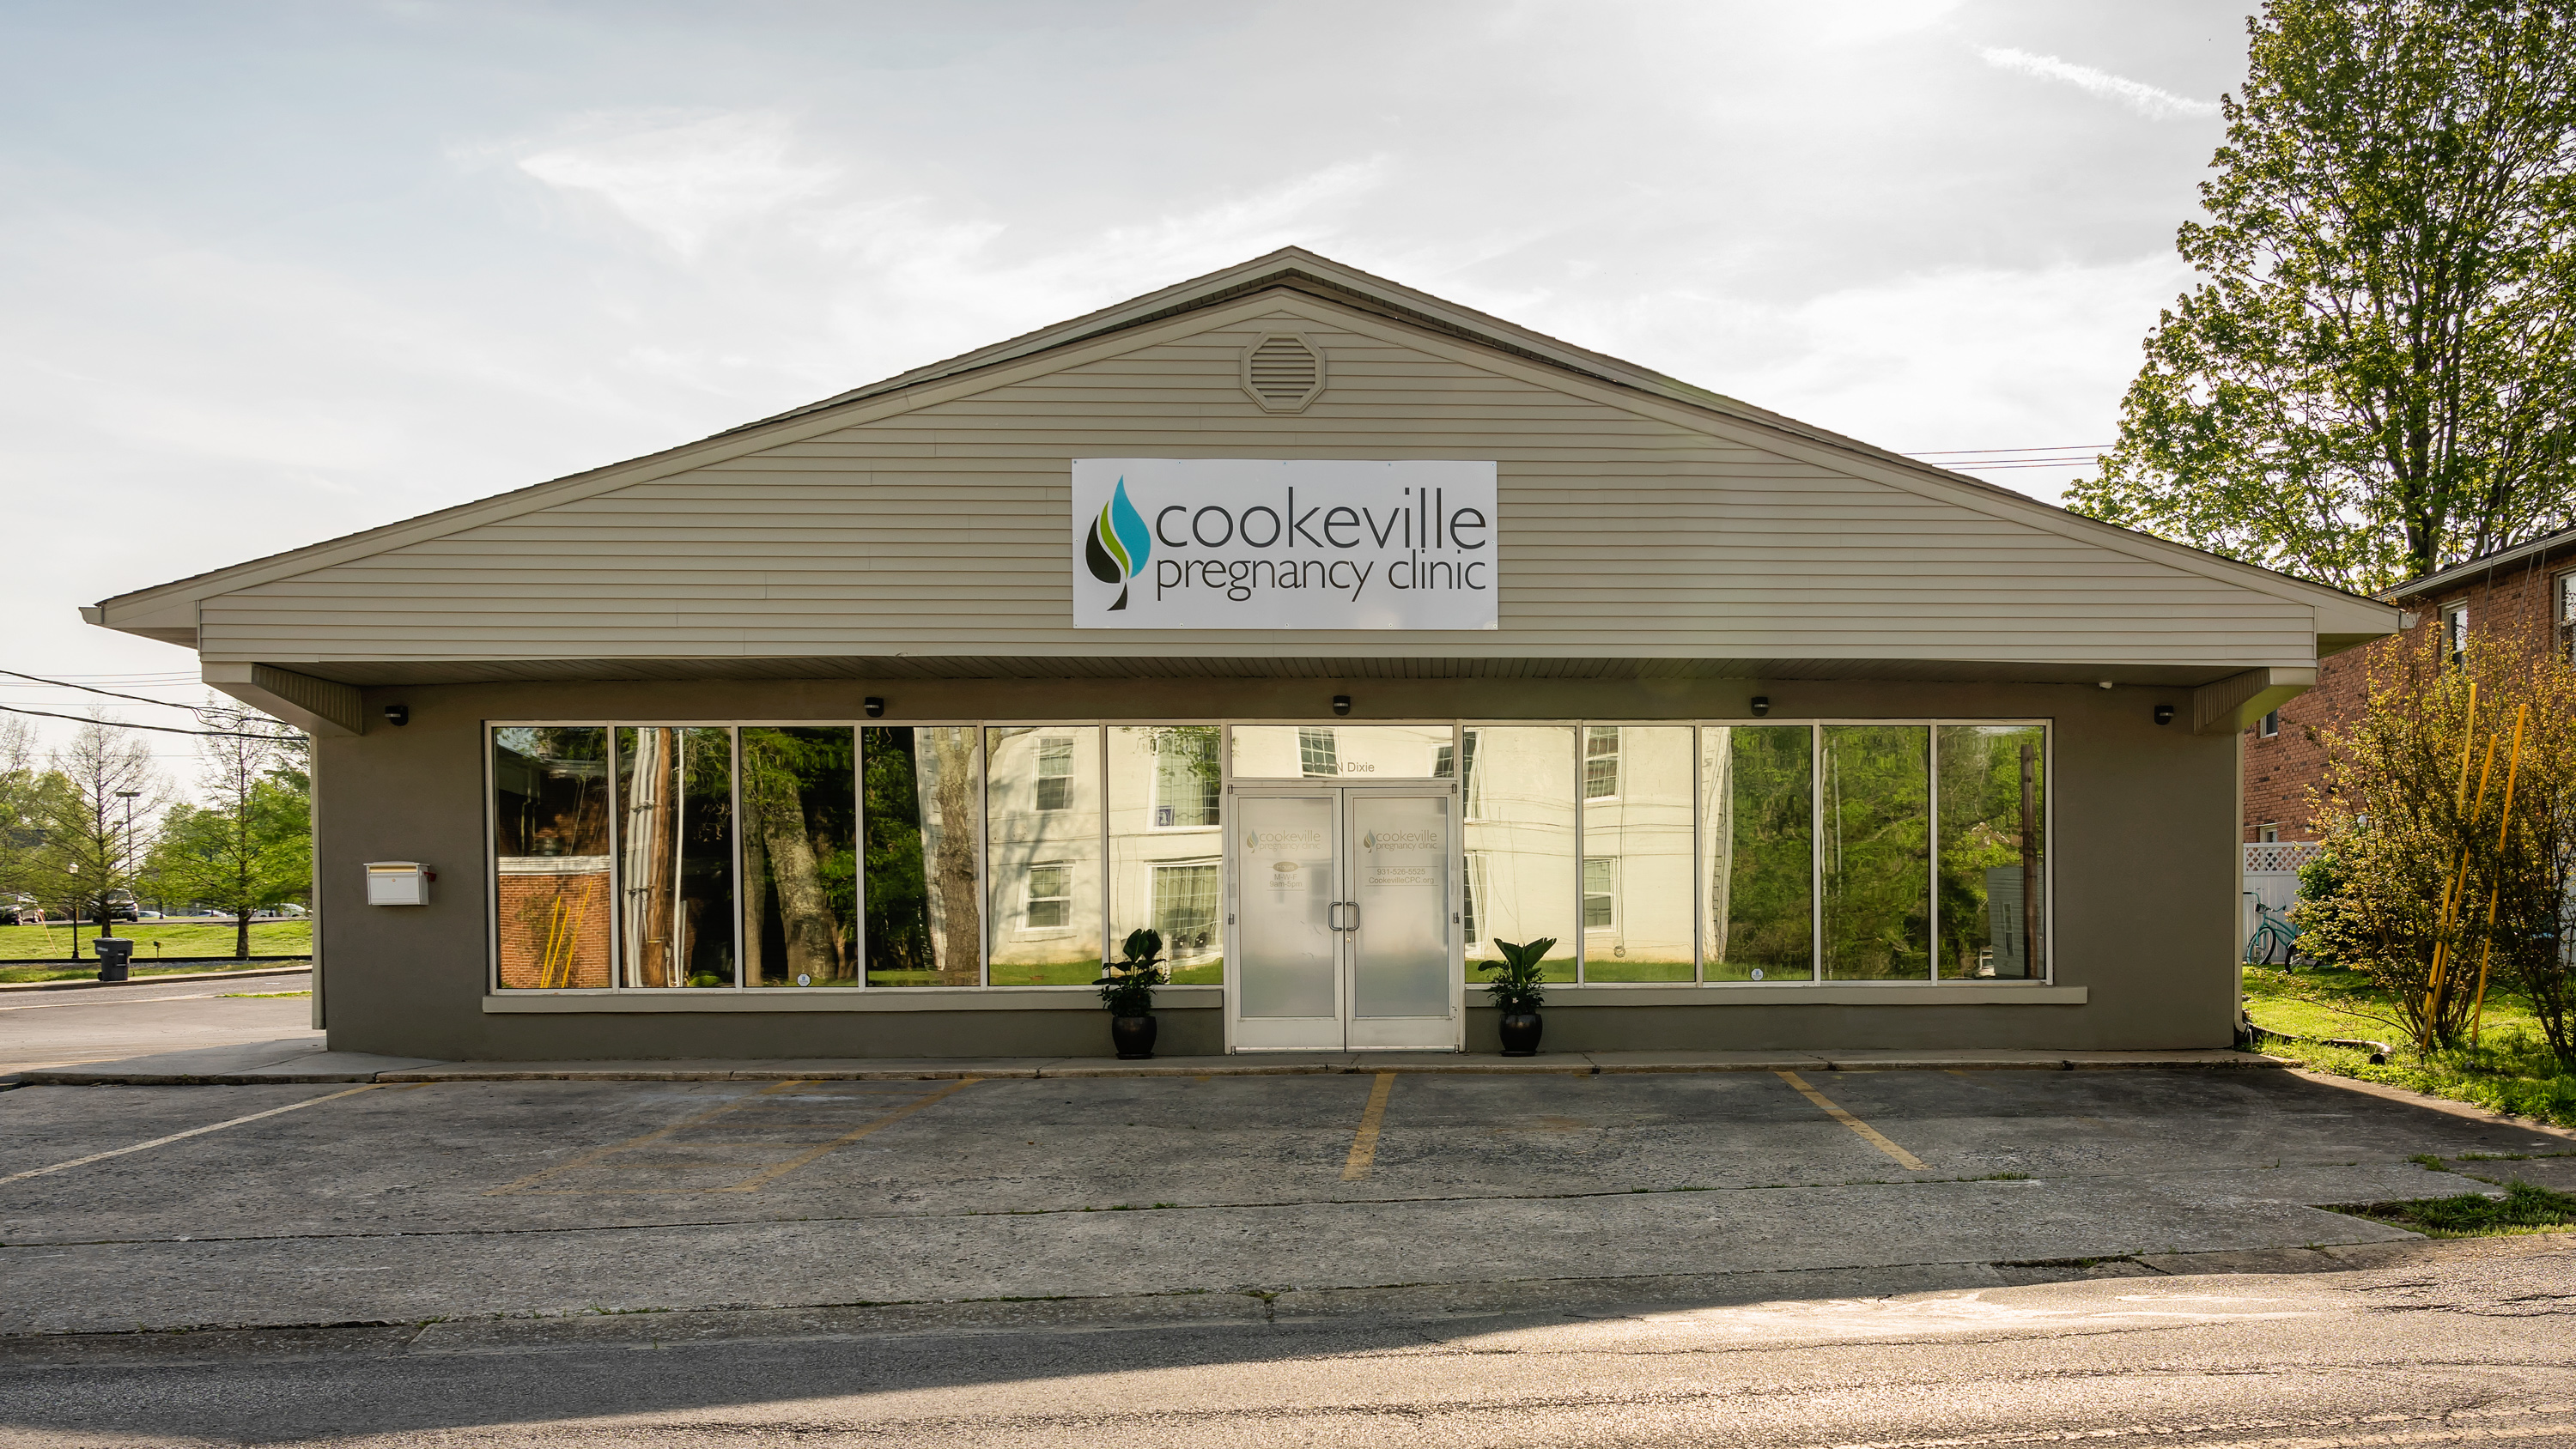 Cookeville Pregnancy Center_1 -- m7r05728-edit.jpg